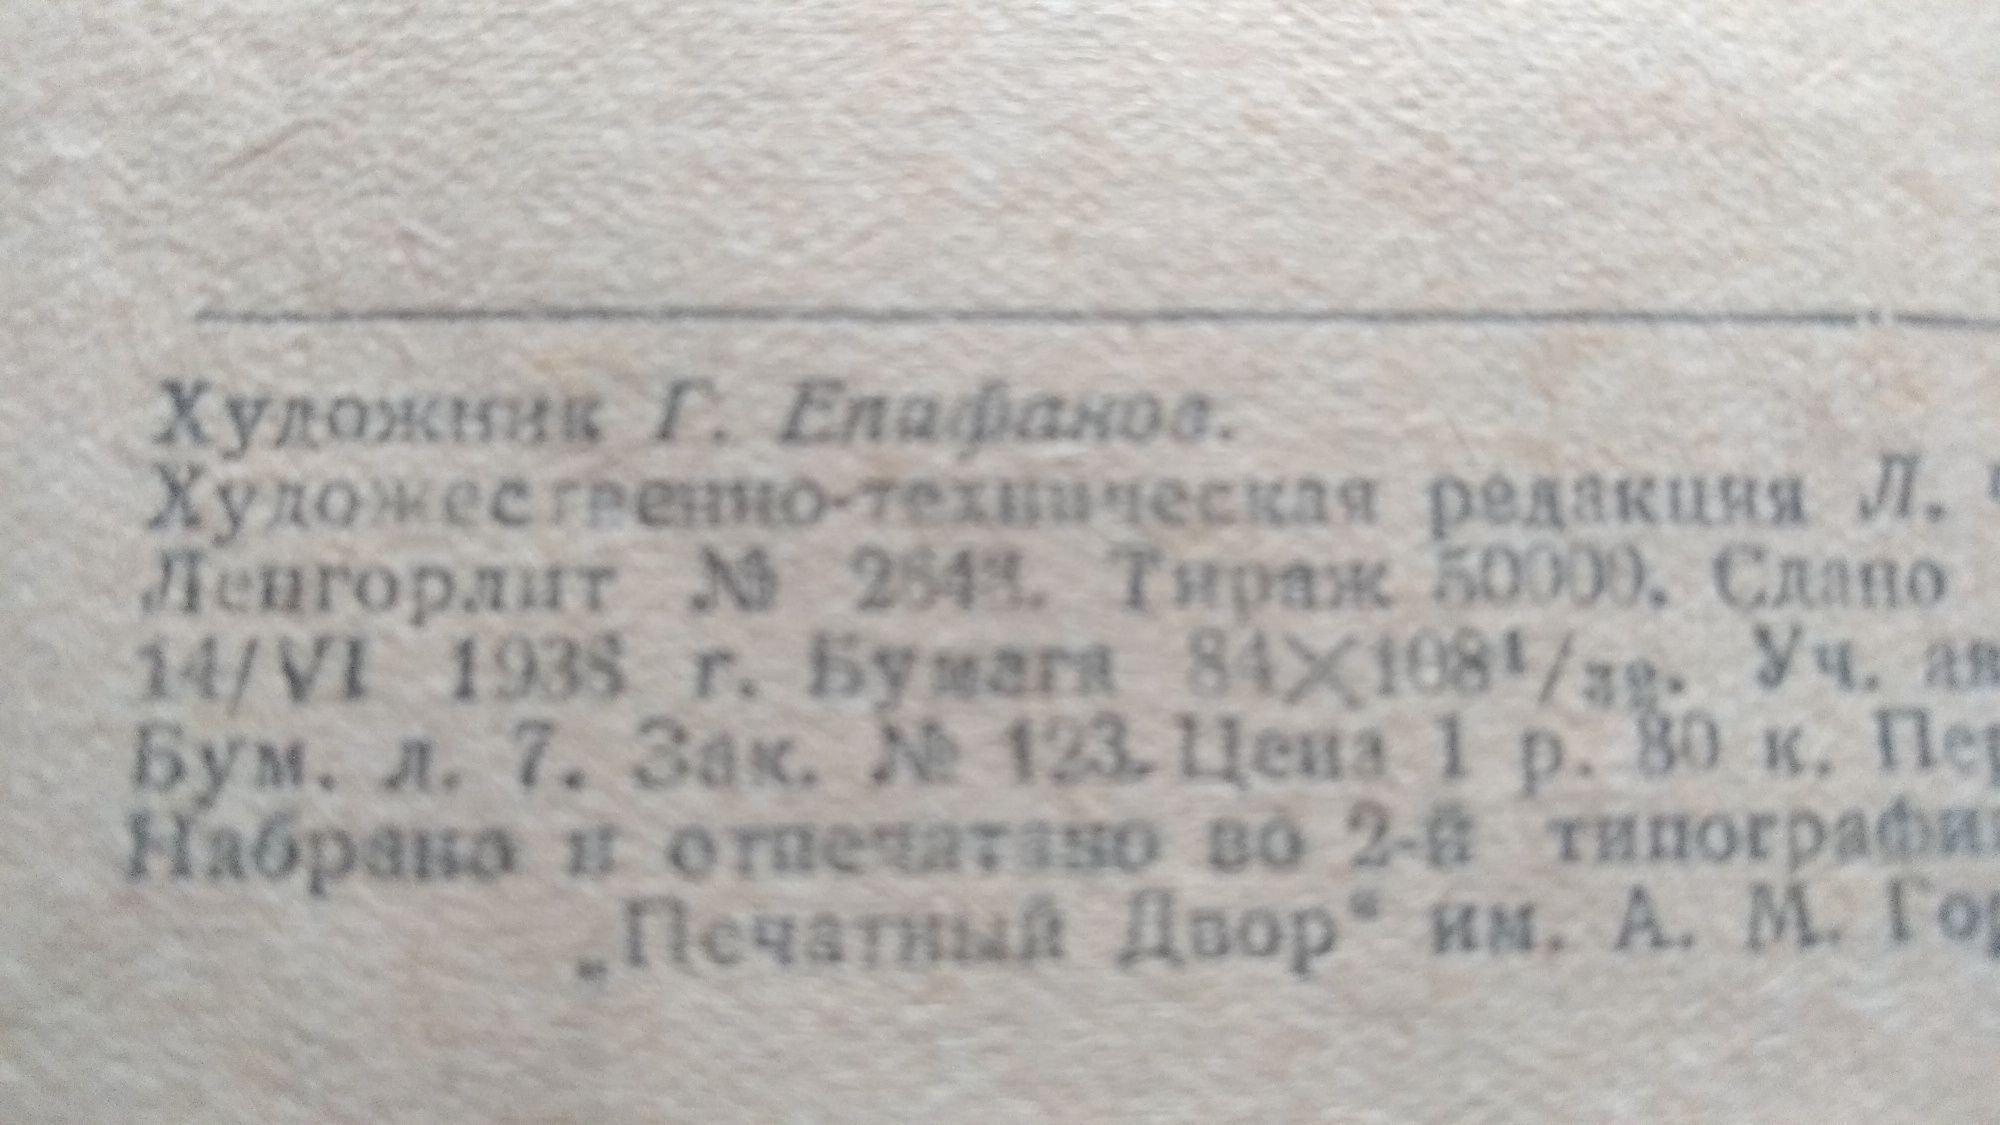 Книга Пушкин Ю.Тынянов, 1938г.